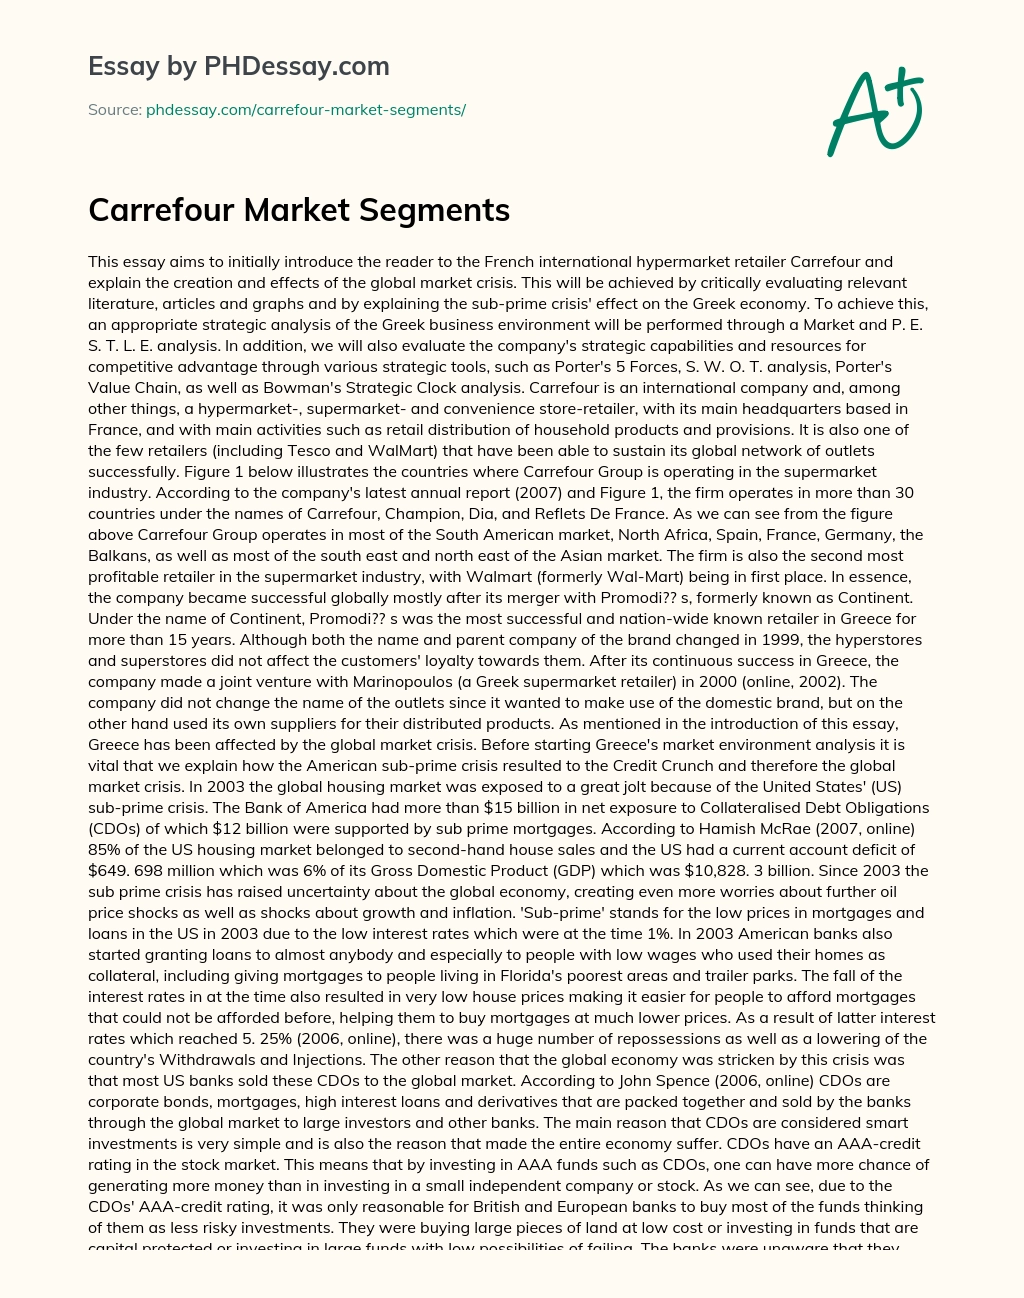 Carrefour Market Segments essay